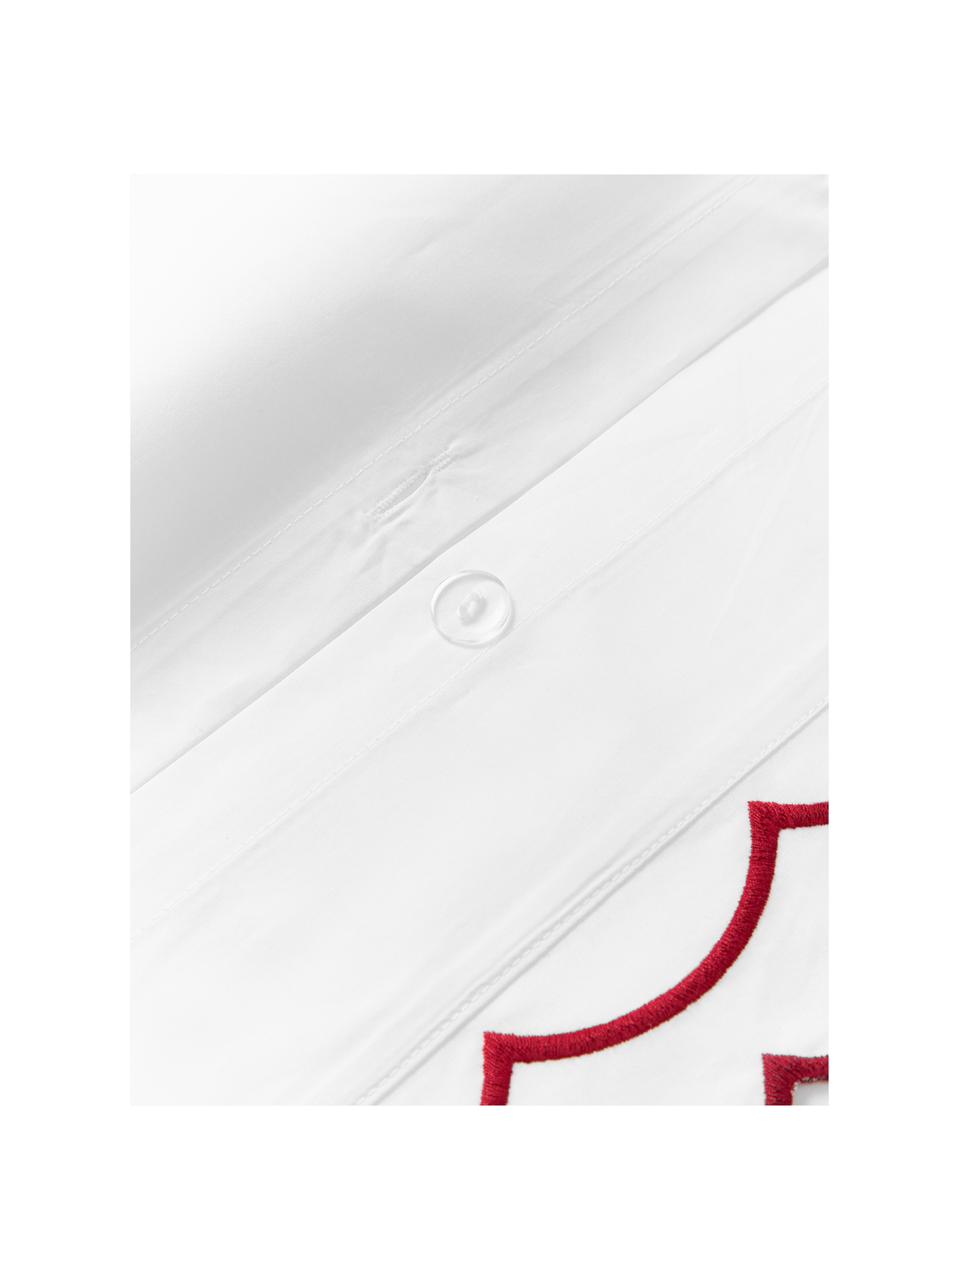 Katoenen perkal dekbedovertrek Atina met golvende bies, Weeftechniek: perkal Draaddichtheid 200, Wit, rood, B 200 x L 200 cm